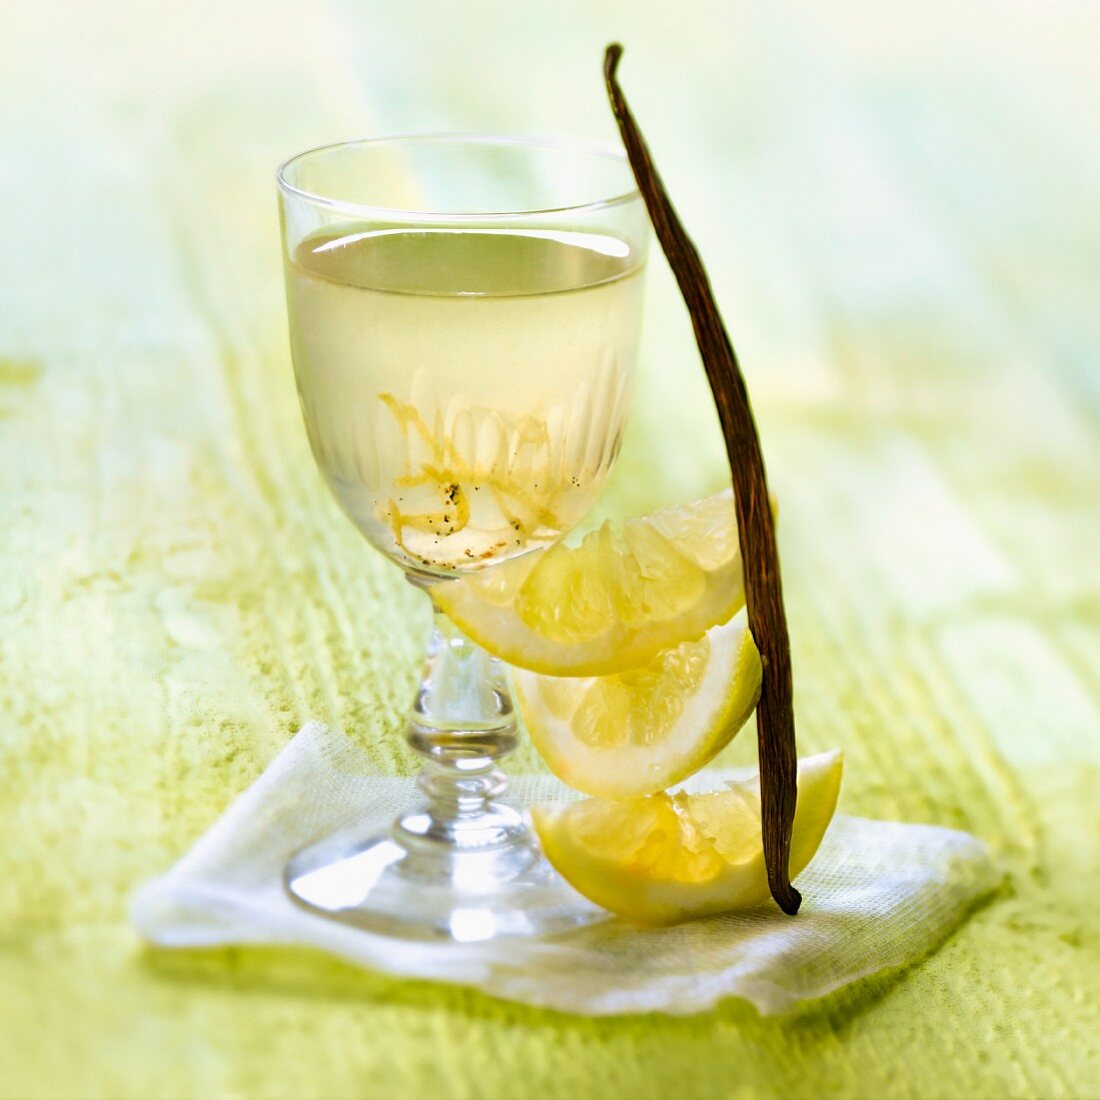 Lemon and vanilla-flavored wine